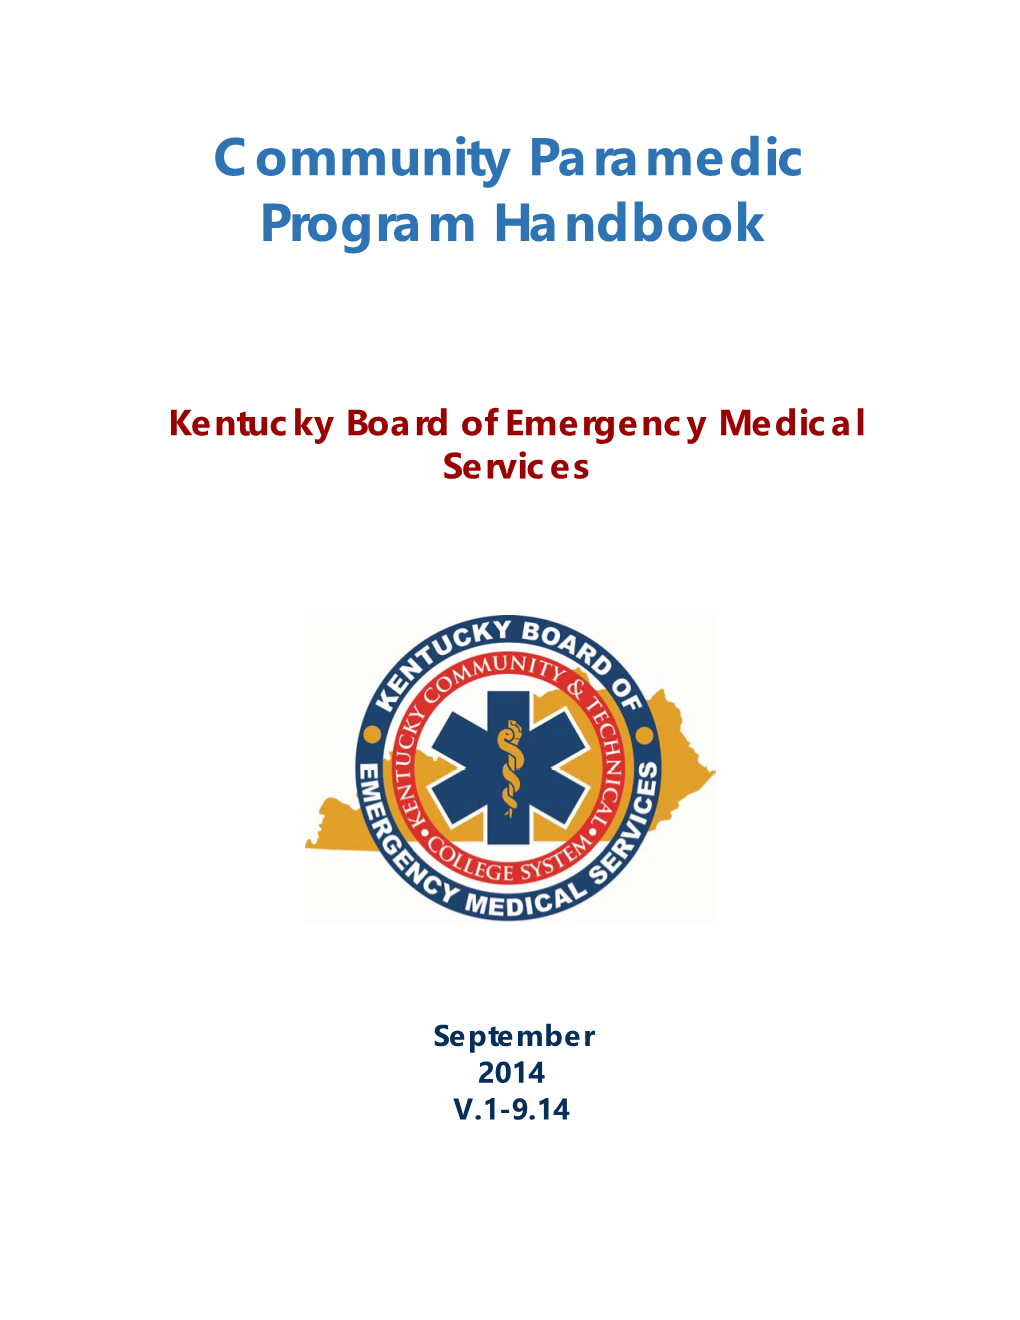 Community Paramedic Program Handbook